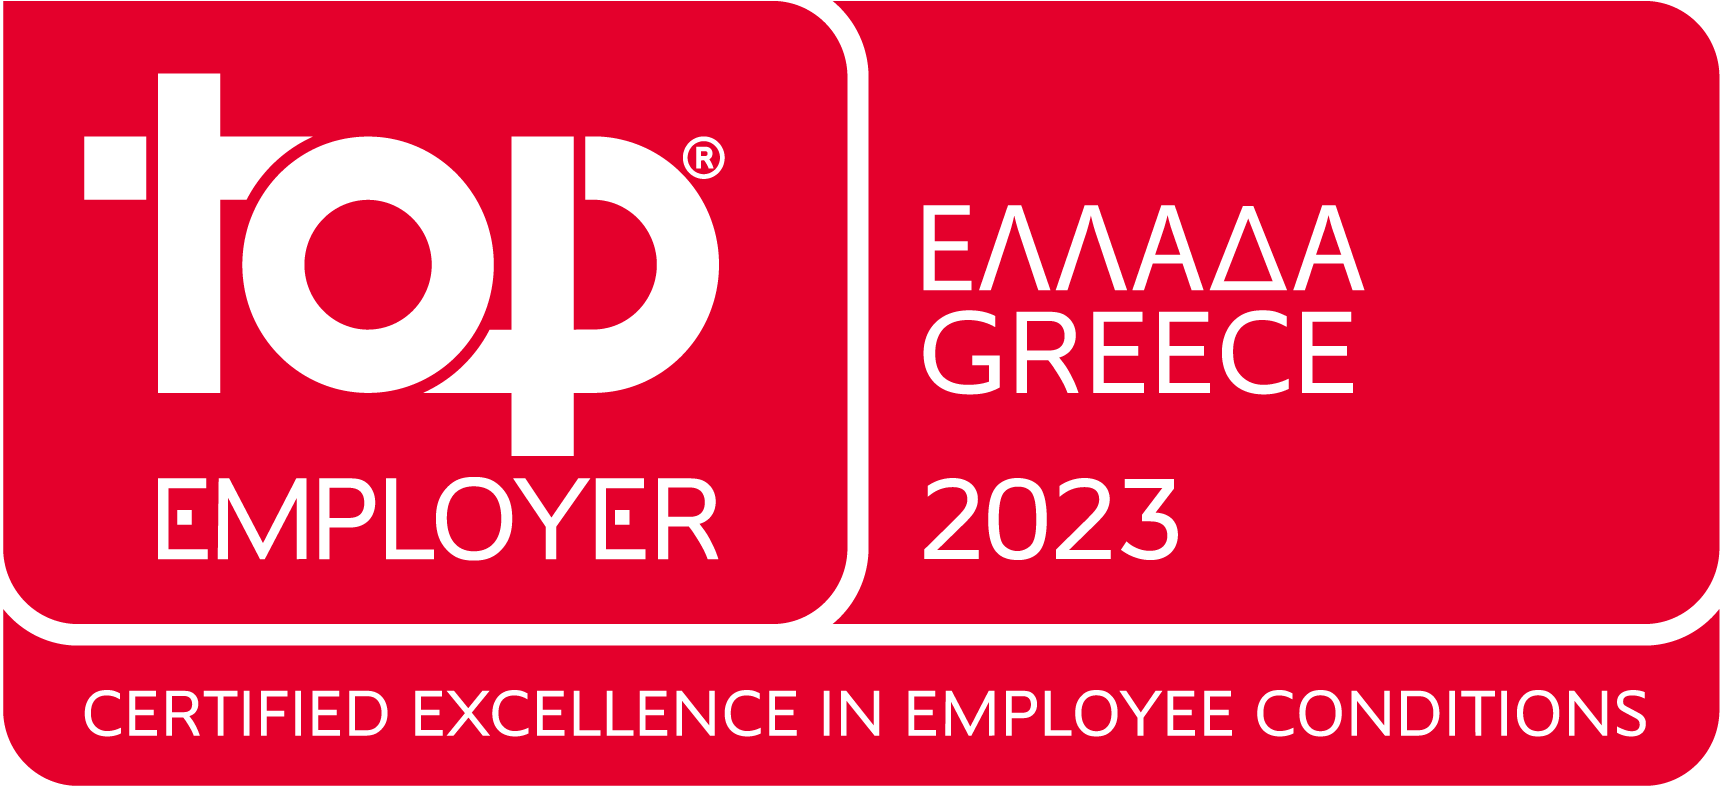 Top employer greece 2023 uni pharma   intermed